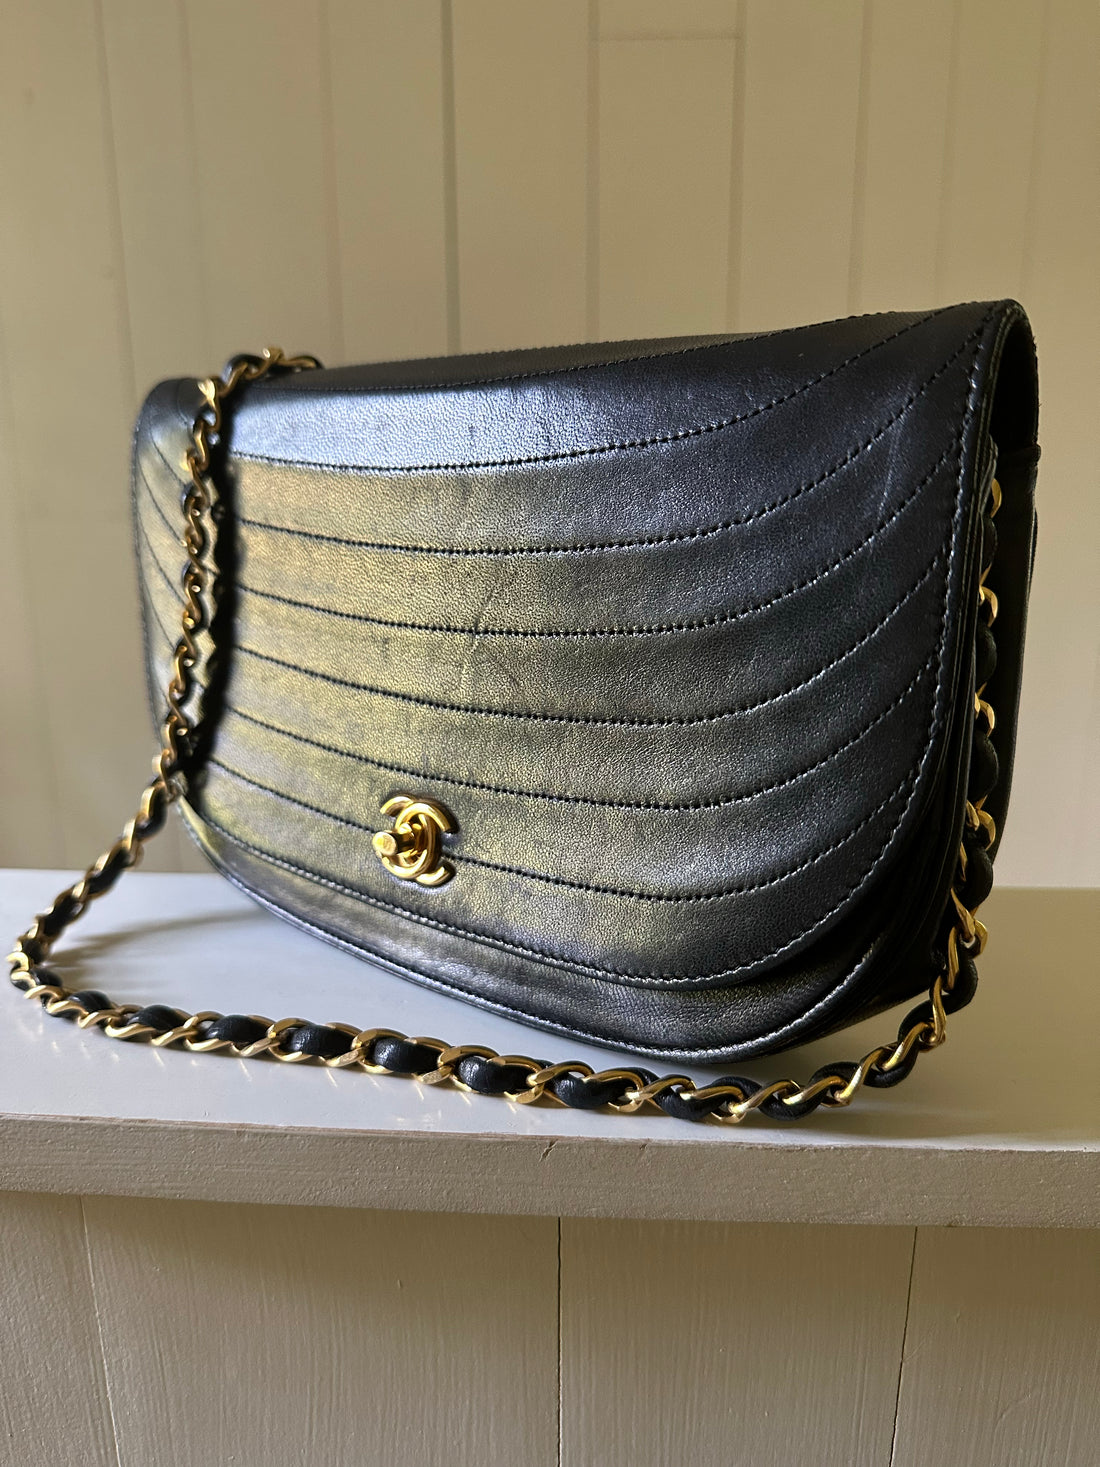 Chanel Half Moon Single Flap Bag front natural light